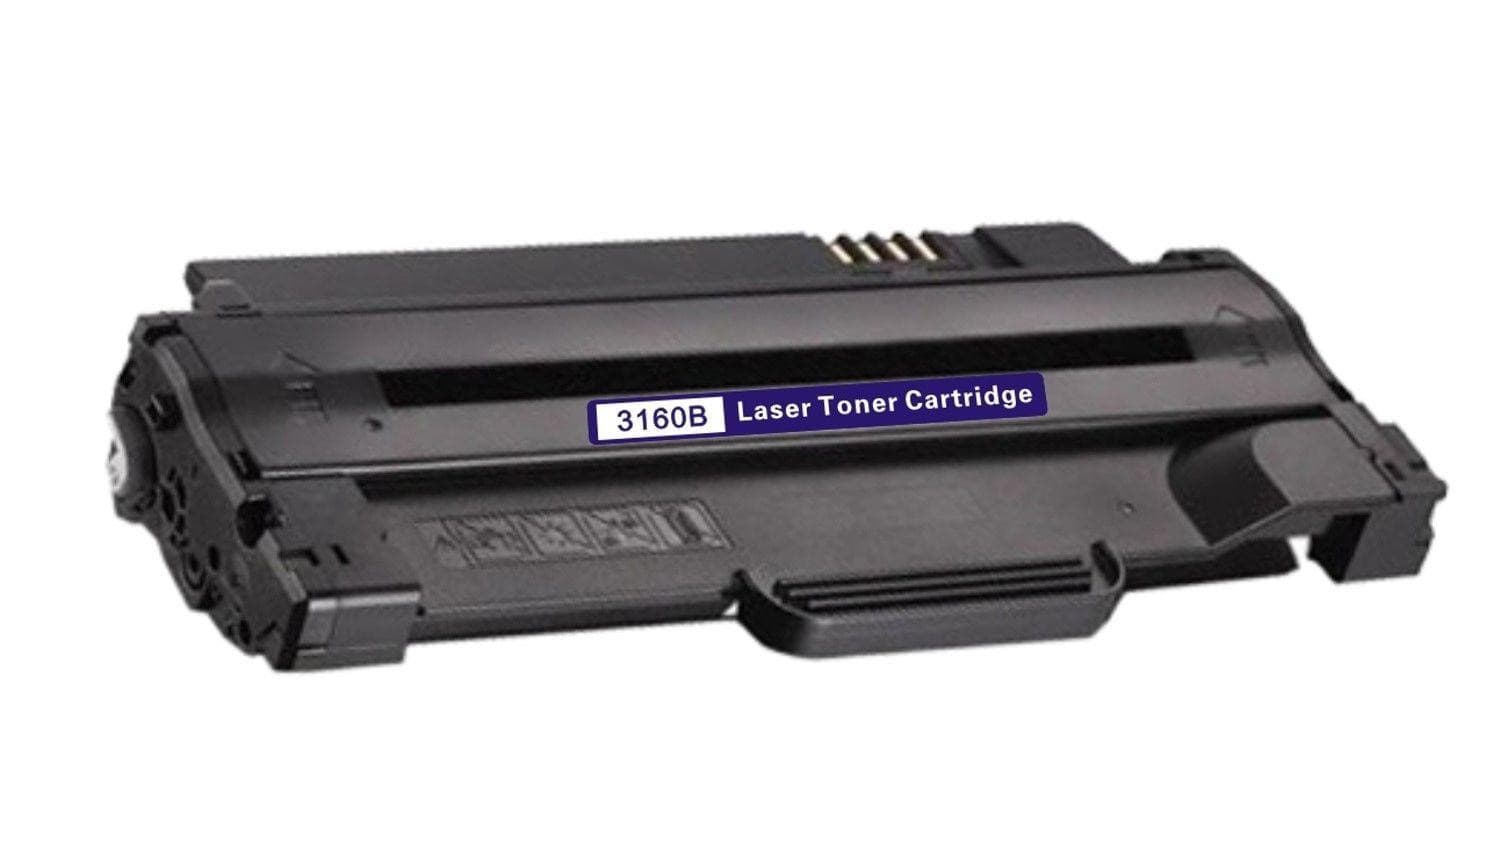 Toner Cartridge For Fuji Xerox Phaser 3155 3160 3160N 3140 CWAA0805 - Office Catch